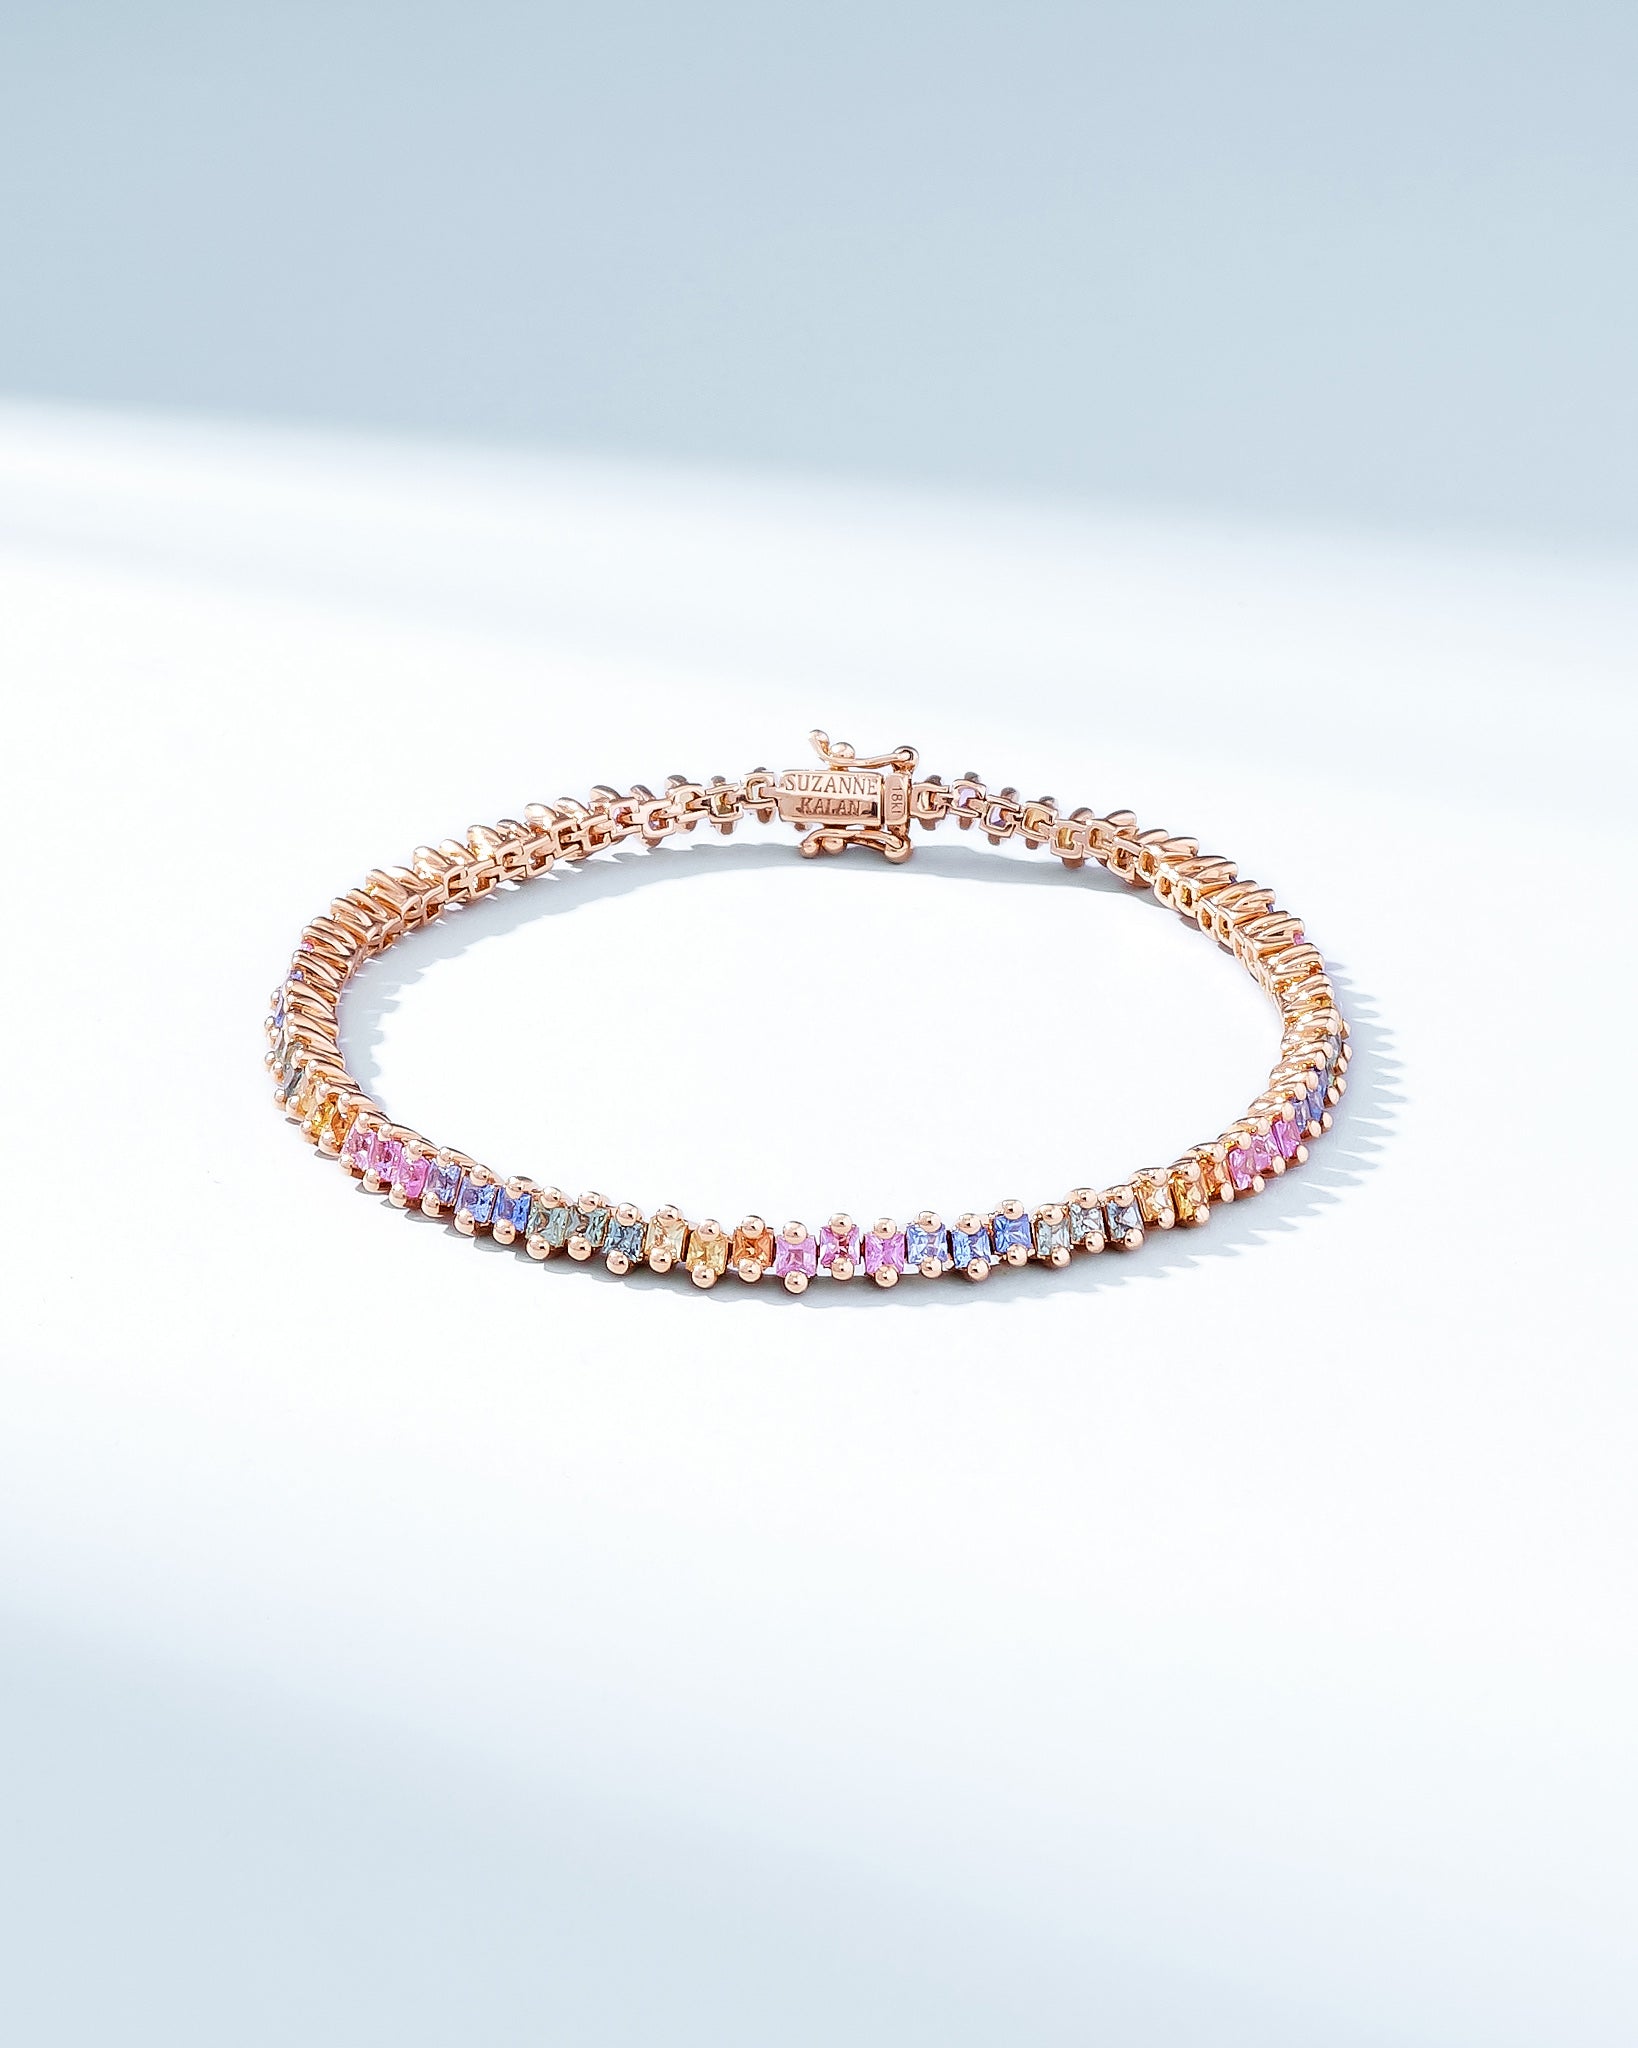 Suzanne Kalan Princess Midi Pastel Sapphire Tennis Bracelet in 18k rose gold